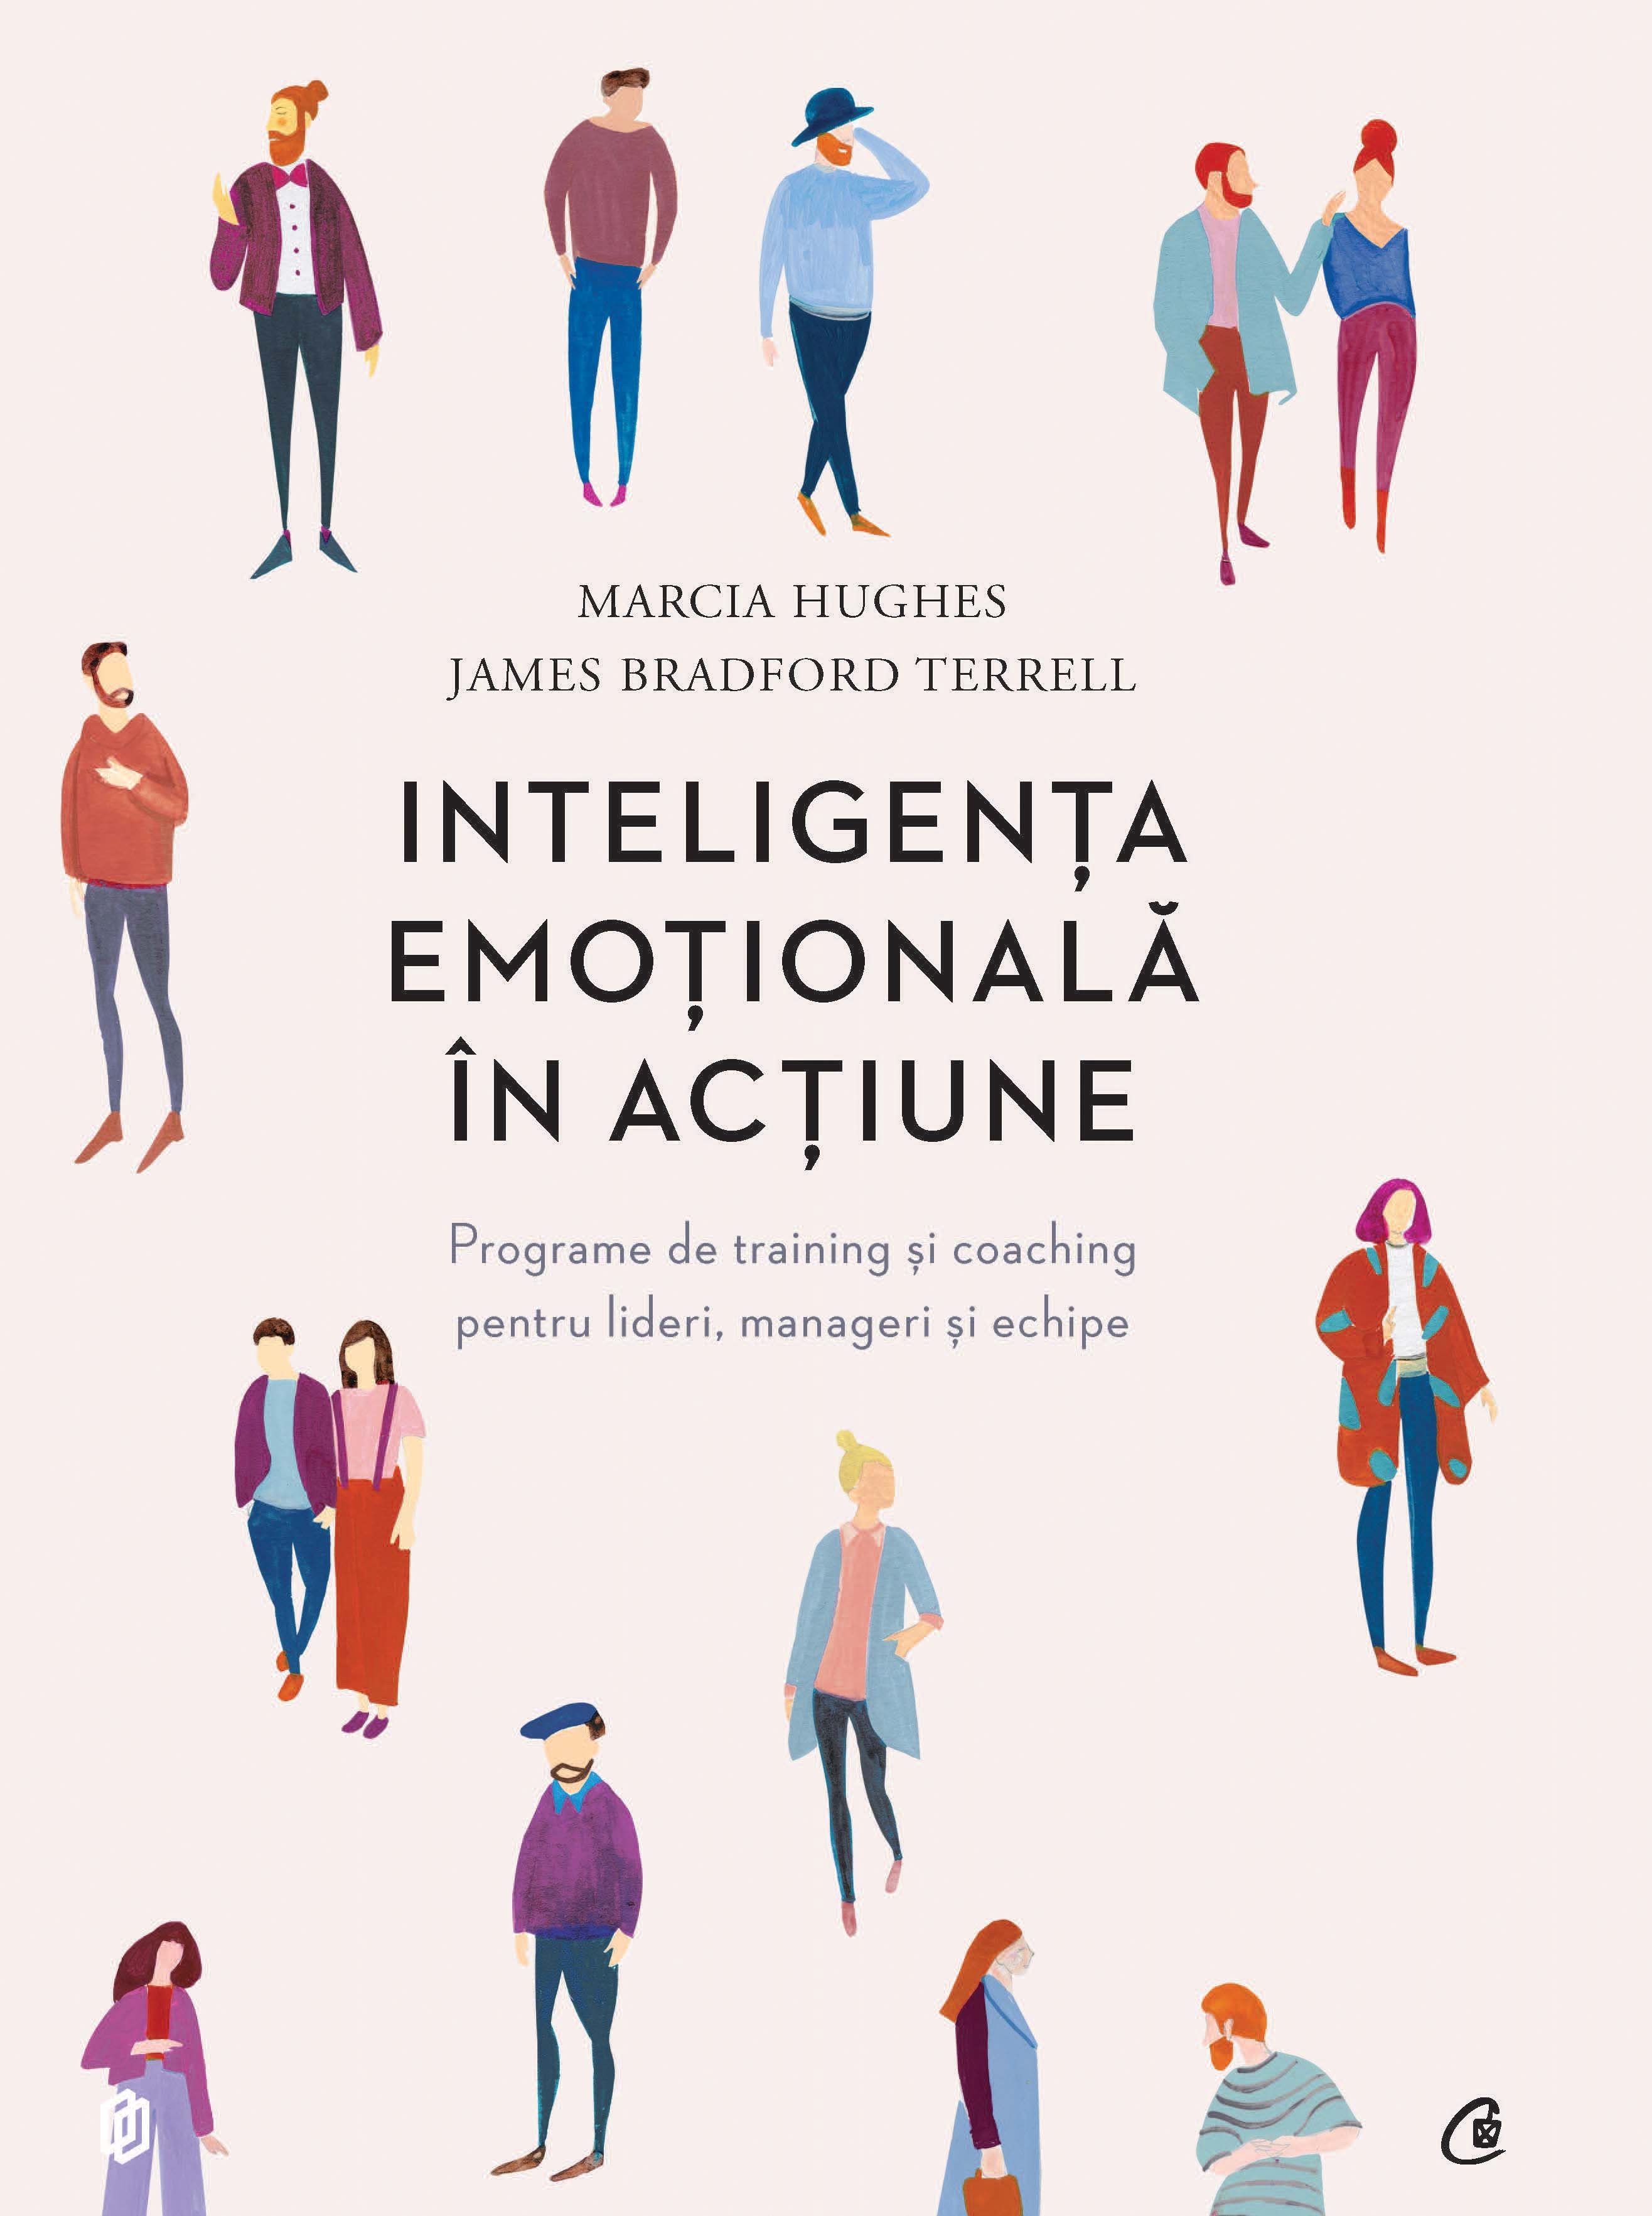 Inteligenta emotionala in actiune | Marcia Hughes, James Bradford Terrell carturesti.ro poza bestsellers.ro